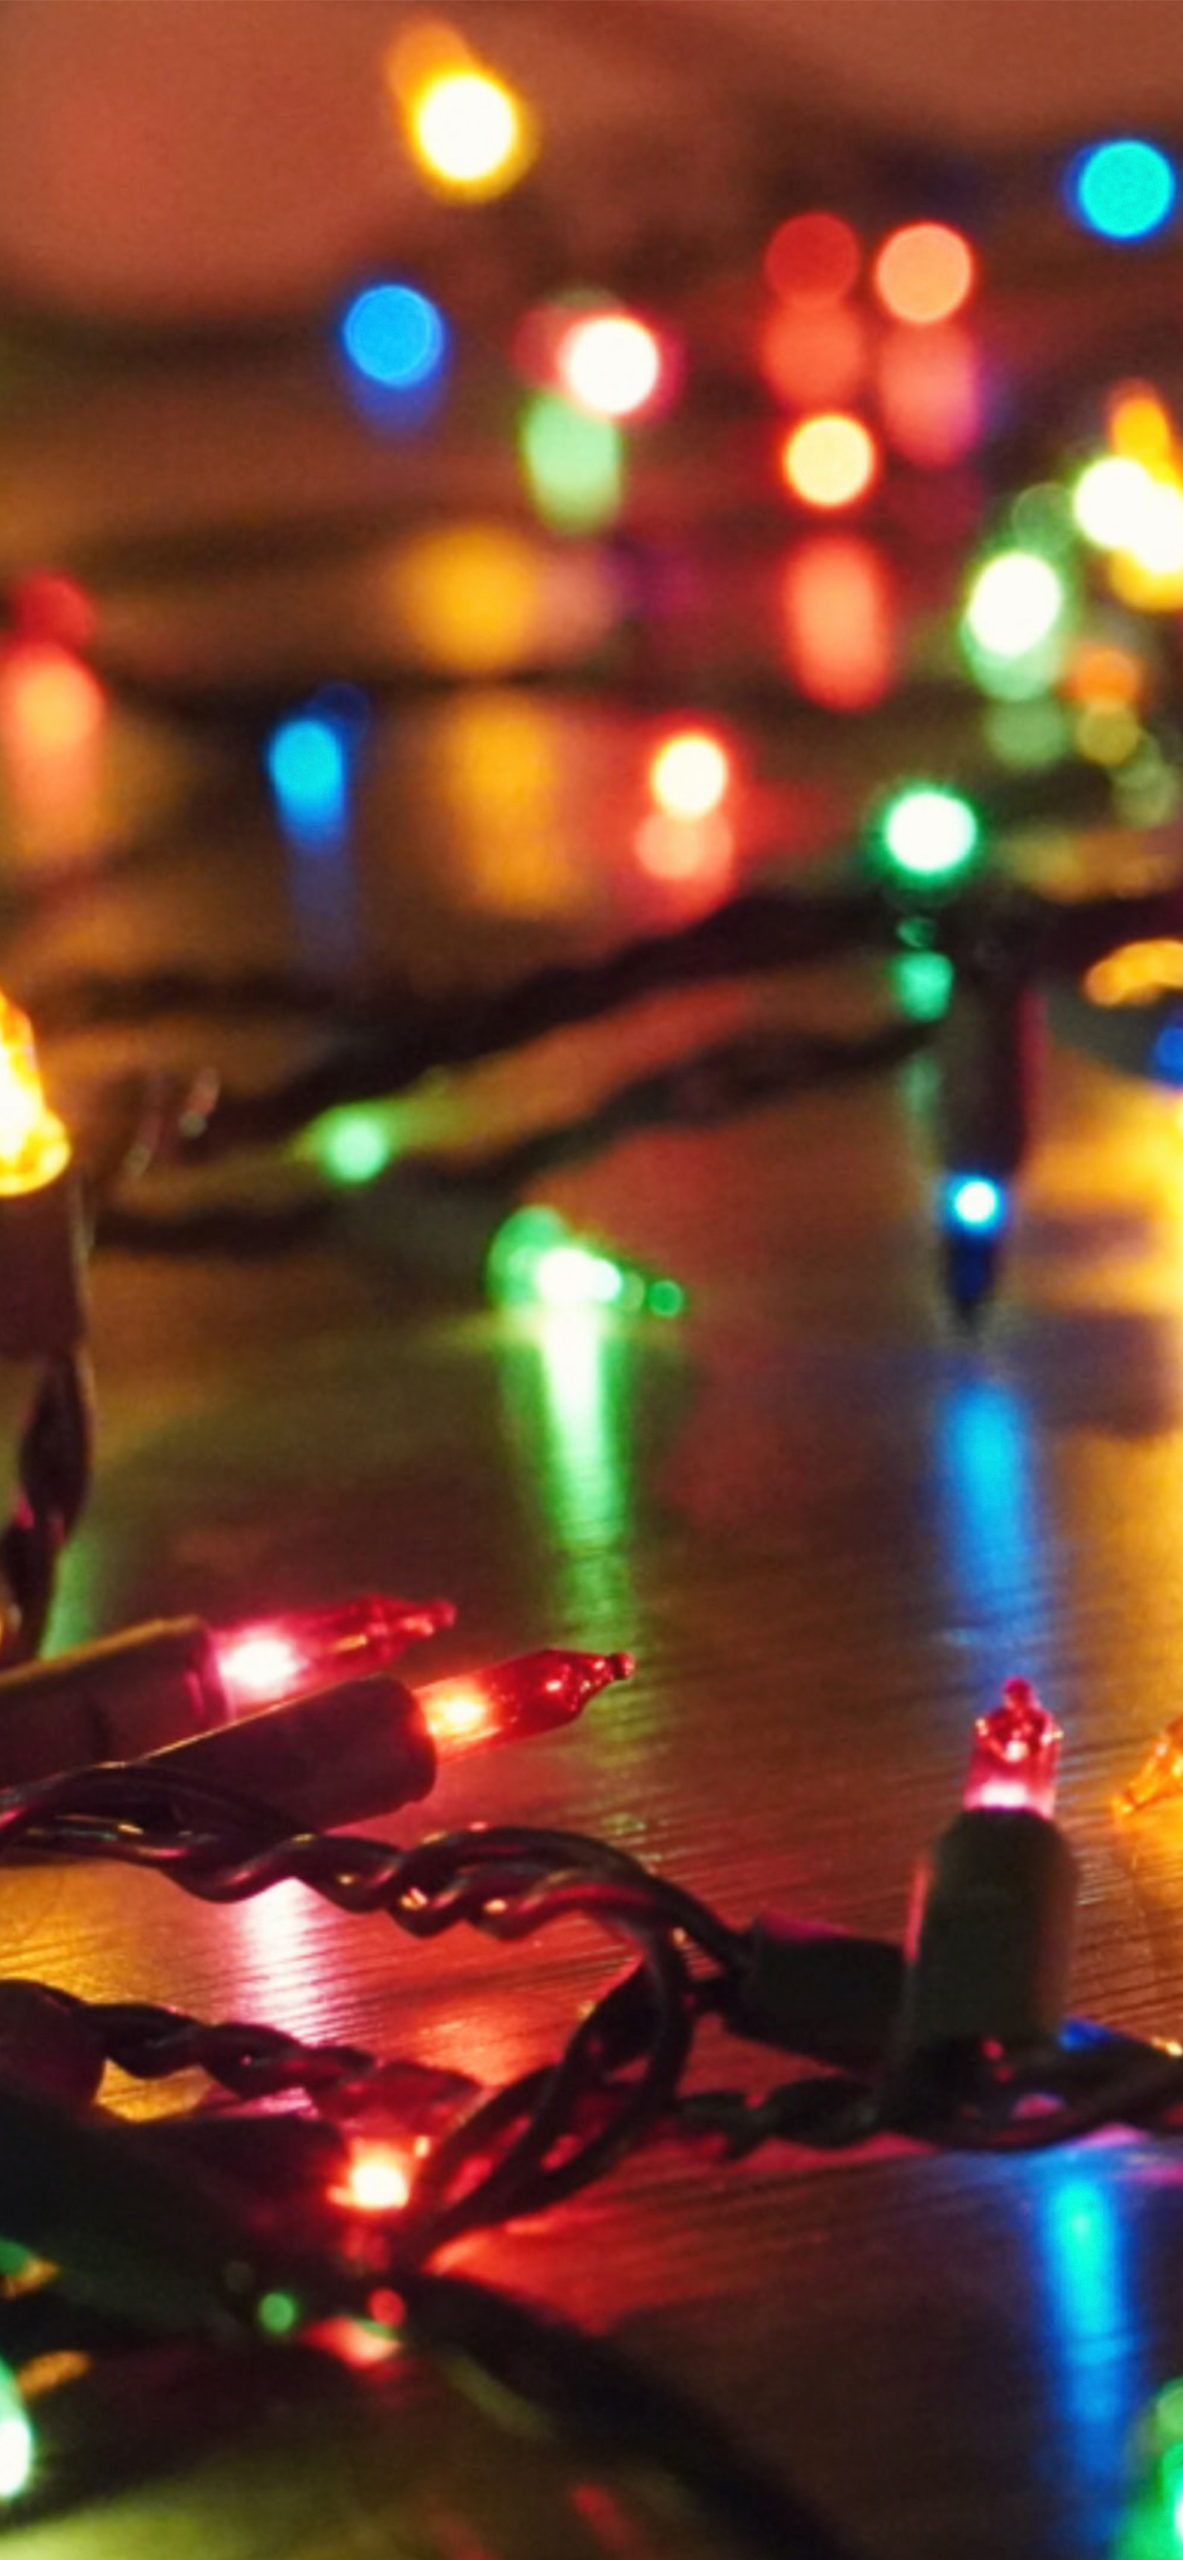 A close up of some christmas lights on the floor - Christmas lights